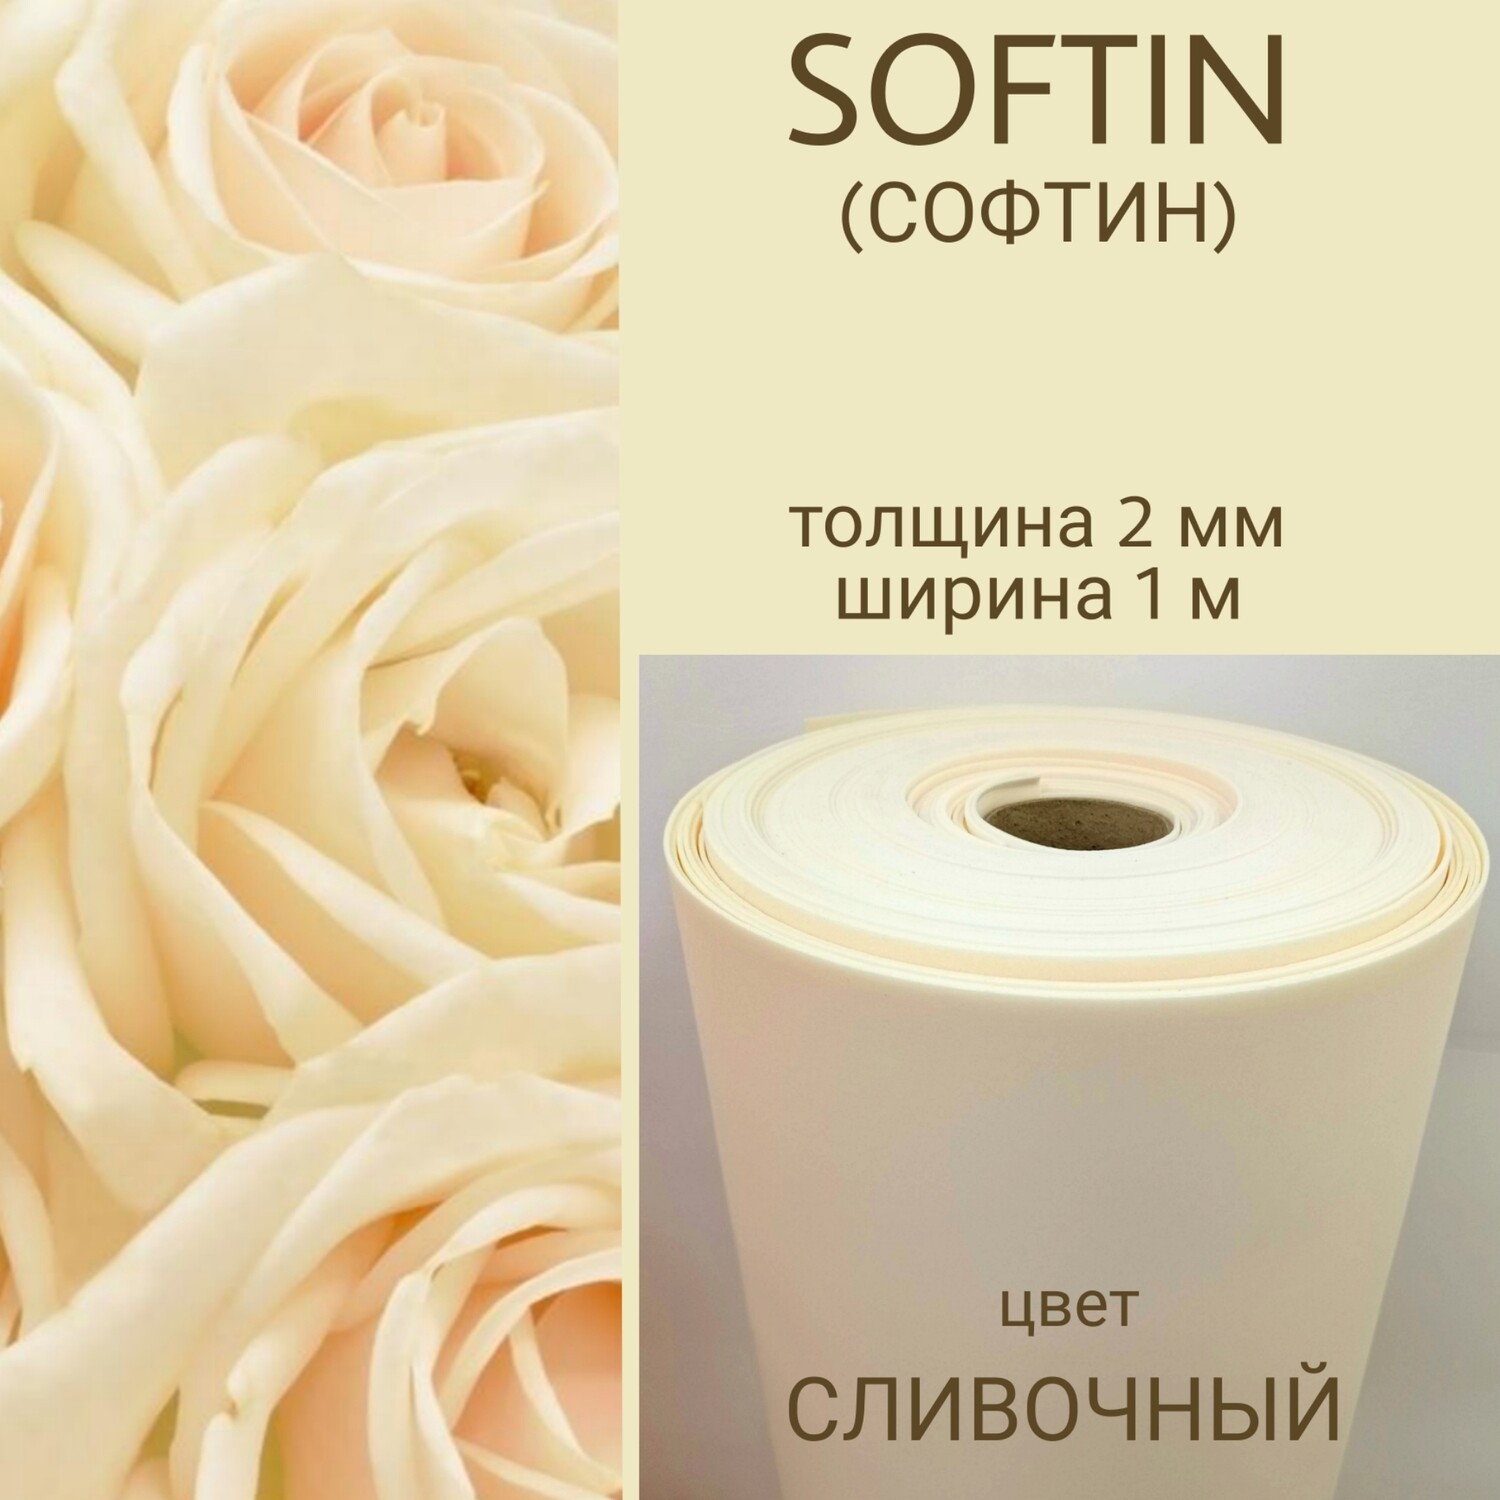 СОФТИН (SOFTIN), цвет - СЛИВОЧНЫЙ, толщина 2 мм, ширина 1 метр, (цена за 1 метр)